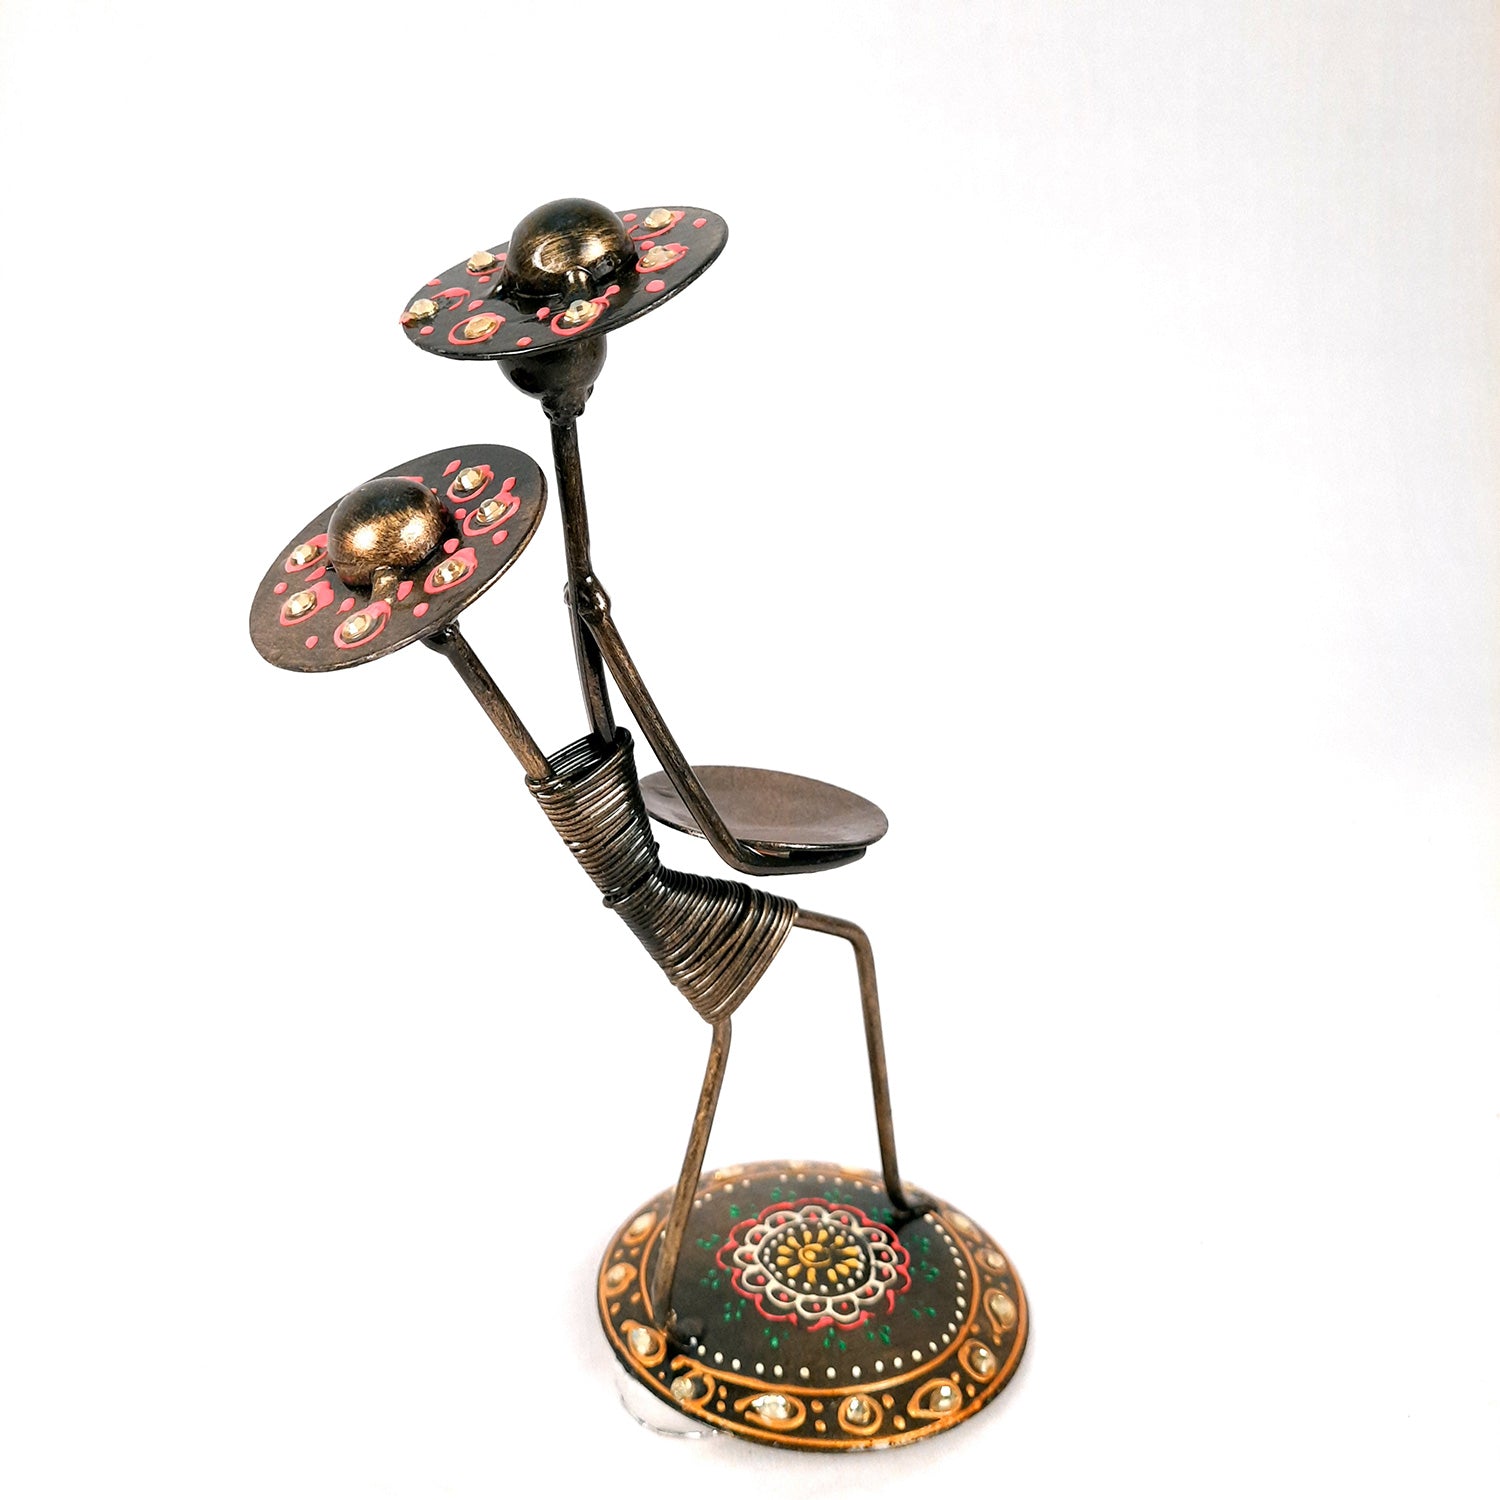 Tea Light Holder Cum Showpiece | T Light Candle Stand - Lady Holding Baby Design - For Home Decor, Living room, Table & Shelf Decor, Office, Decorative Item for Diwali & Gifts - 9 Inch - Apkamart